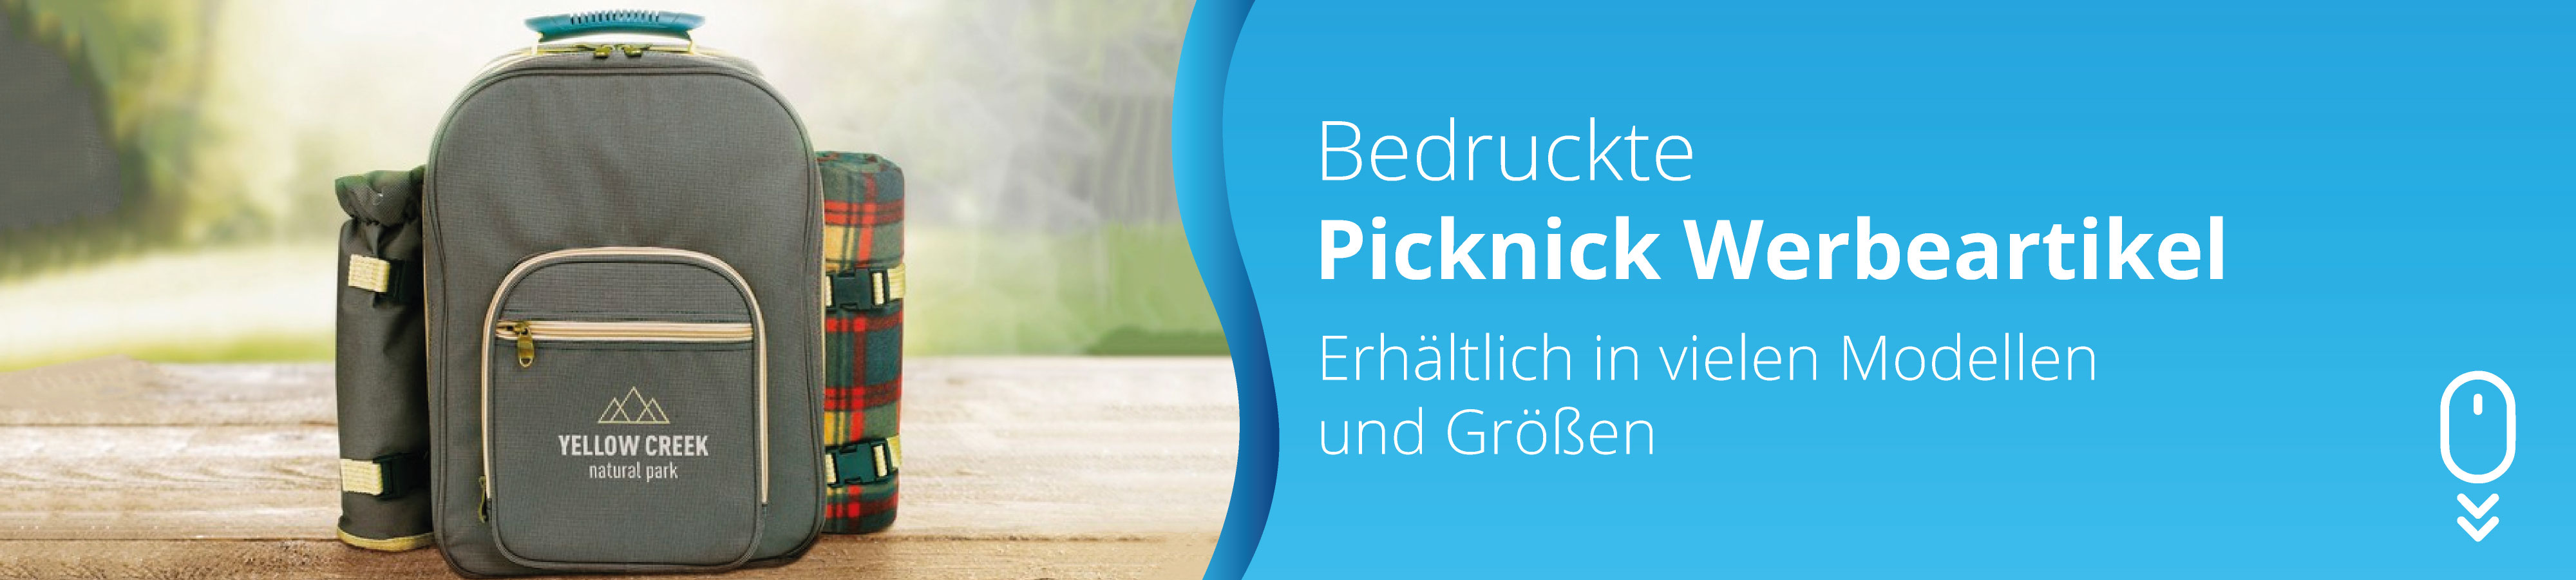 Picknick-Werbemitteln-bedrucken